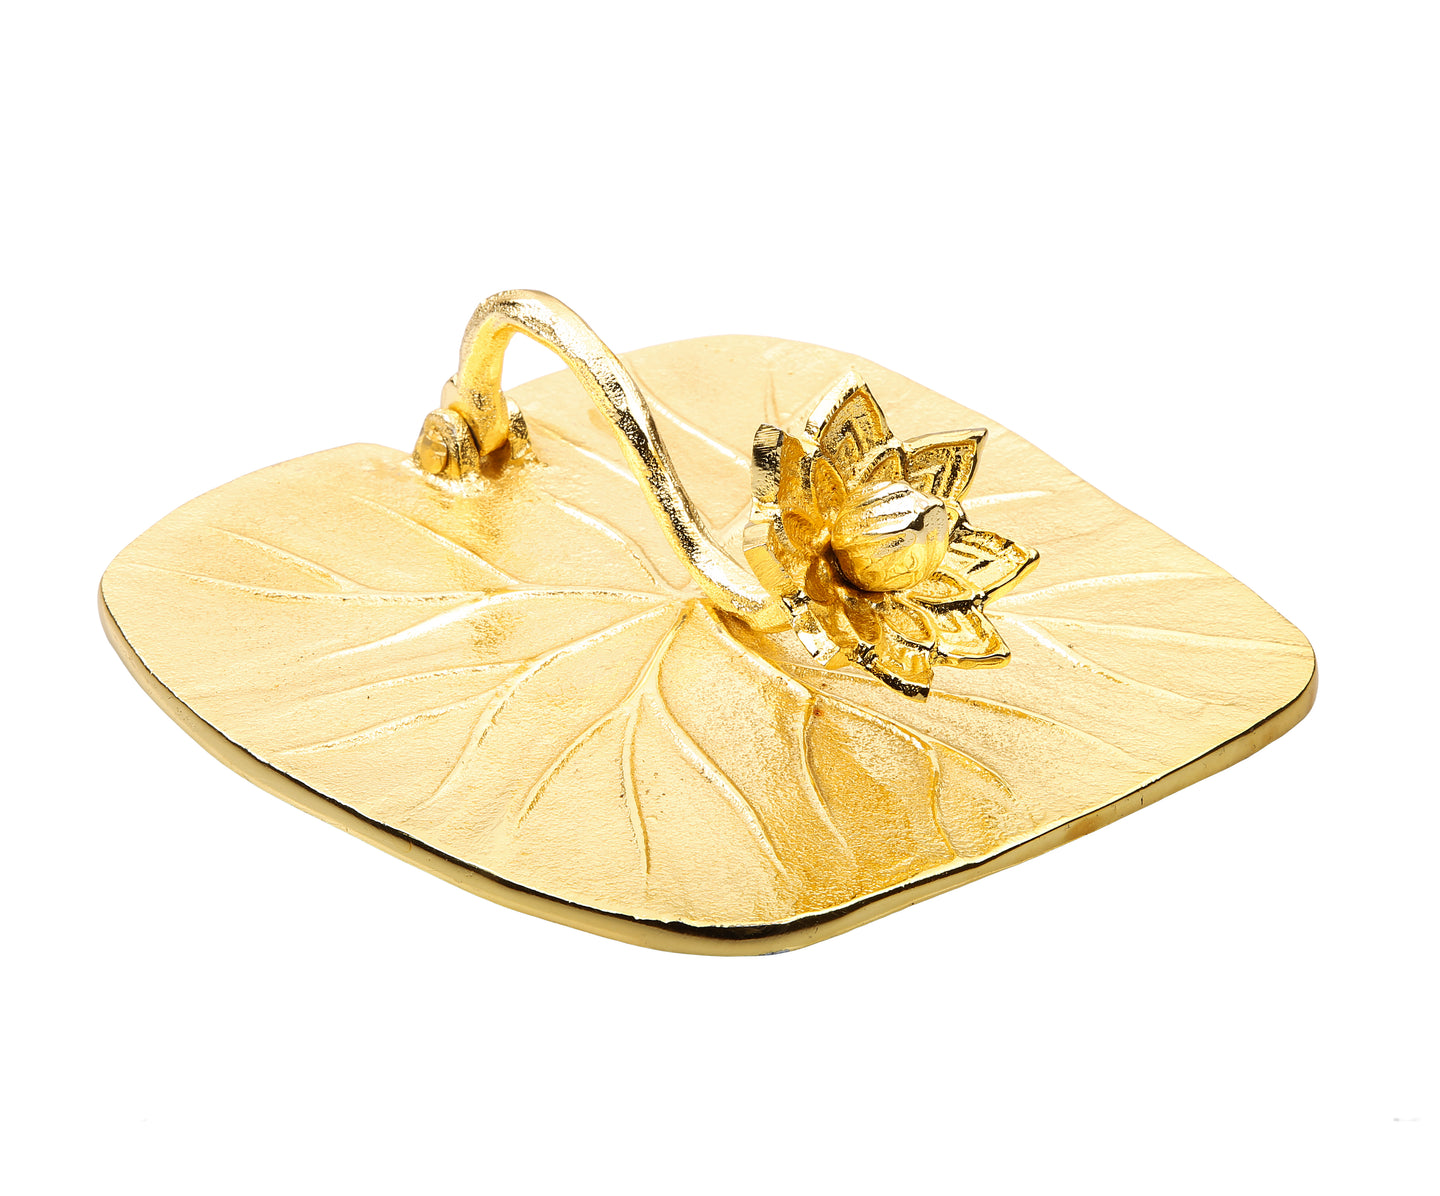 Gold Square Napkin Holder with Lotus Flower Design